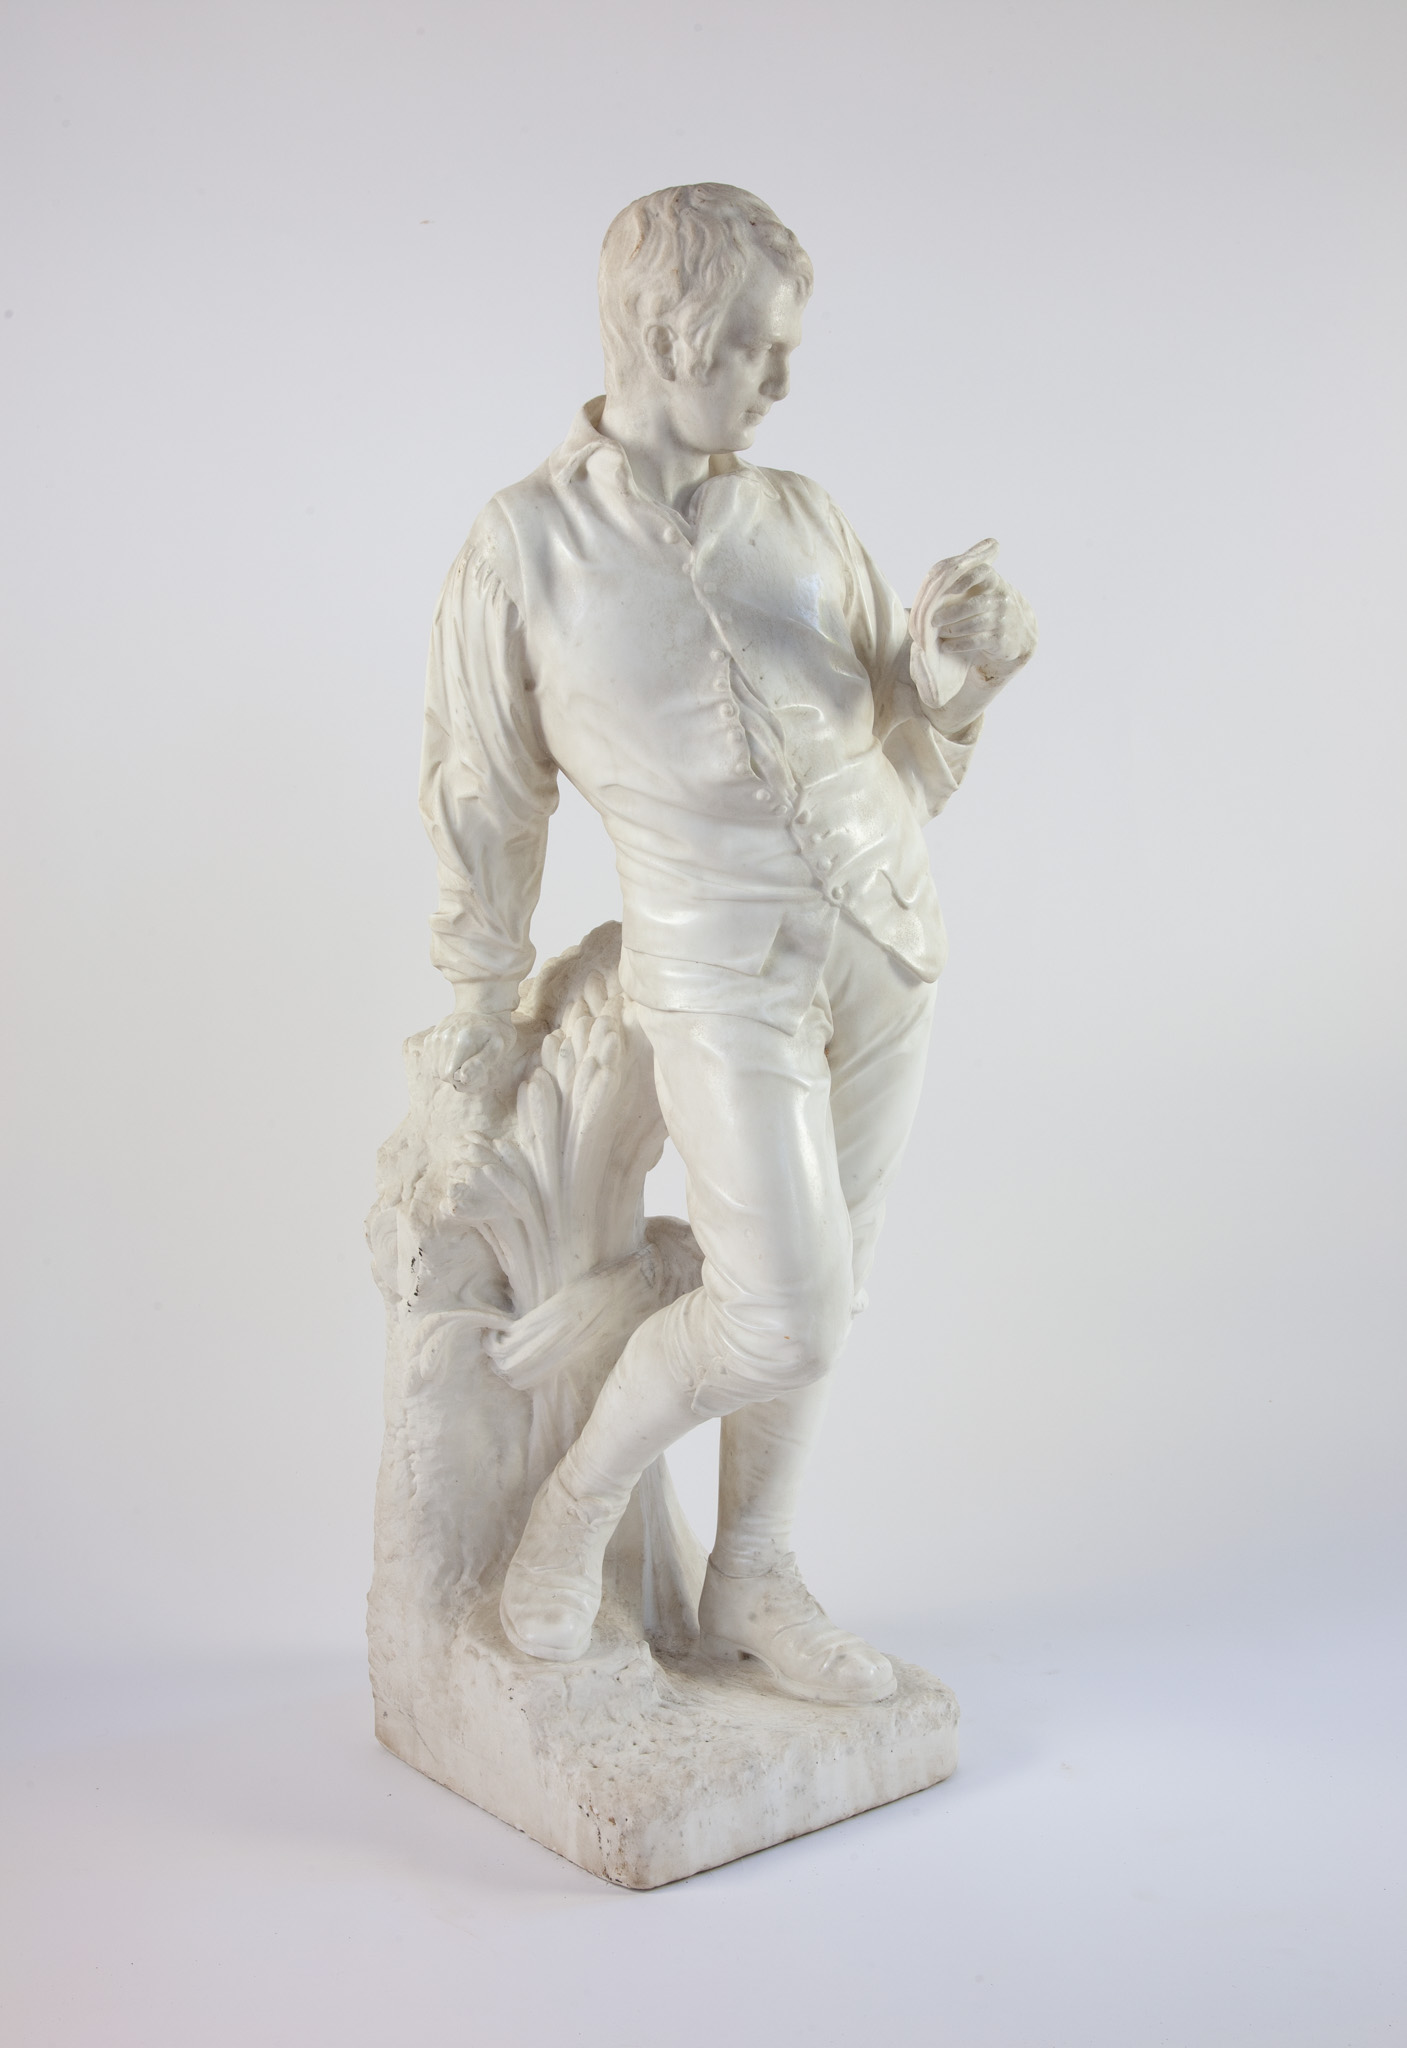 J Rhind (1828-1892): A marble statue of Robert Burns